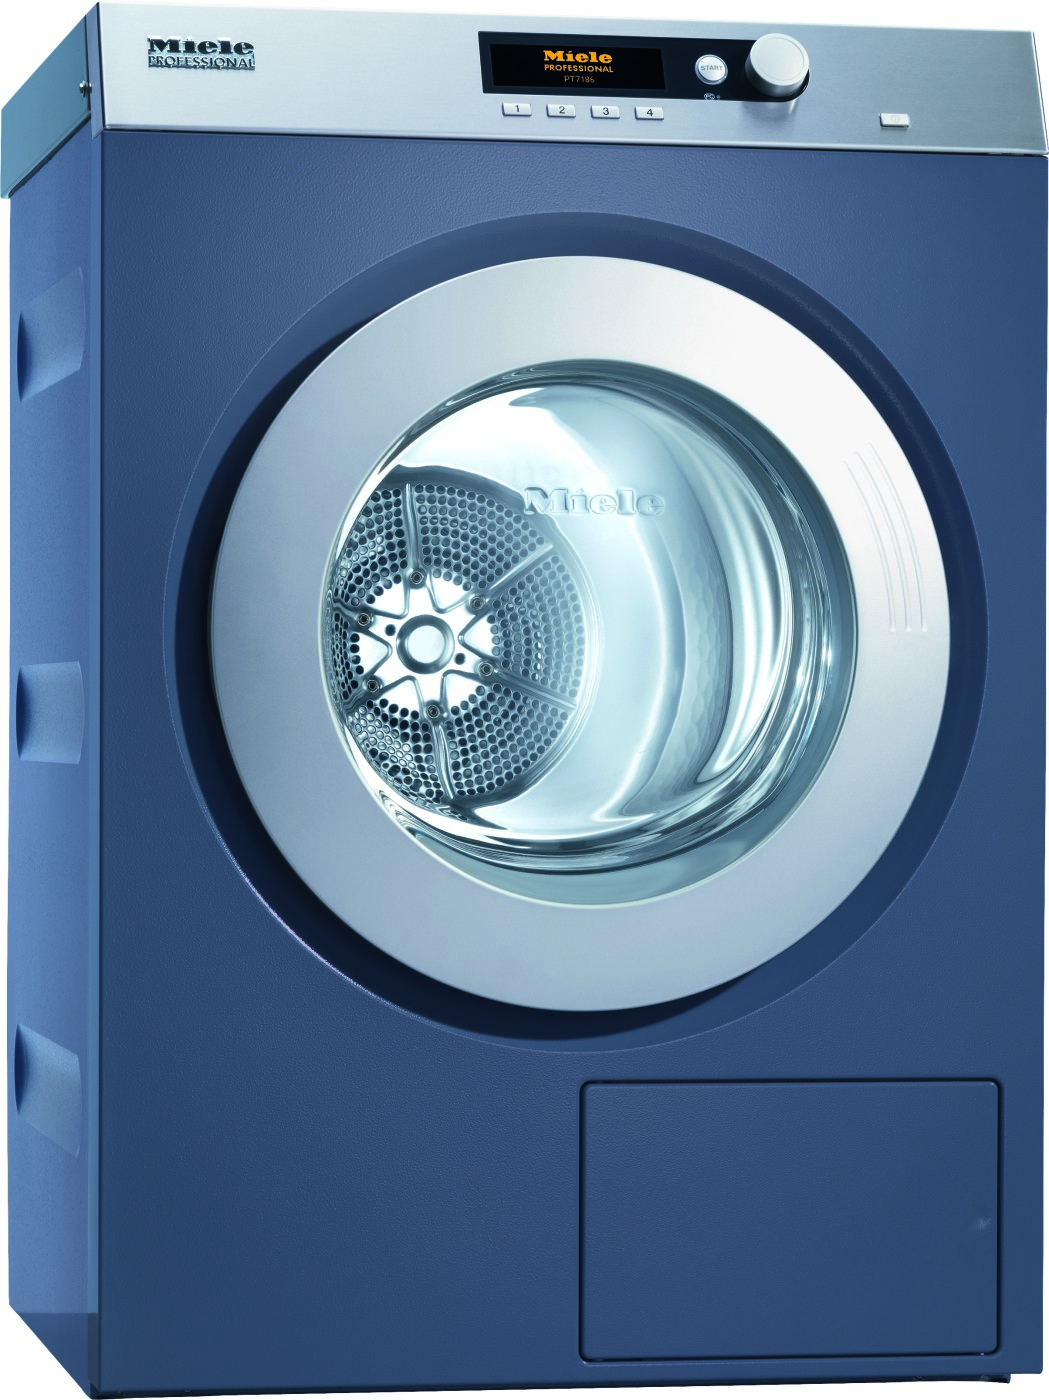 Miele Professional - PT XL 9KG Tumble Dryer - Multibrand Professional